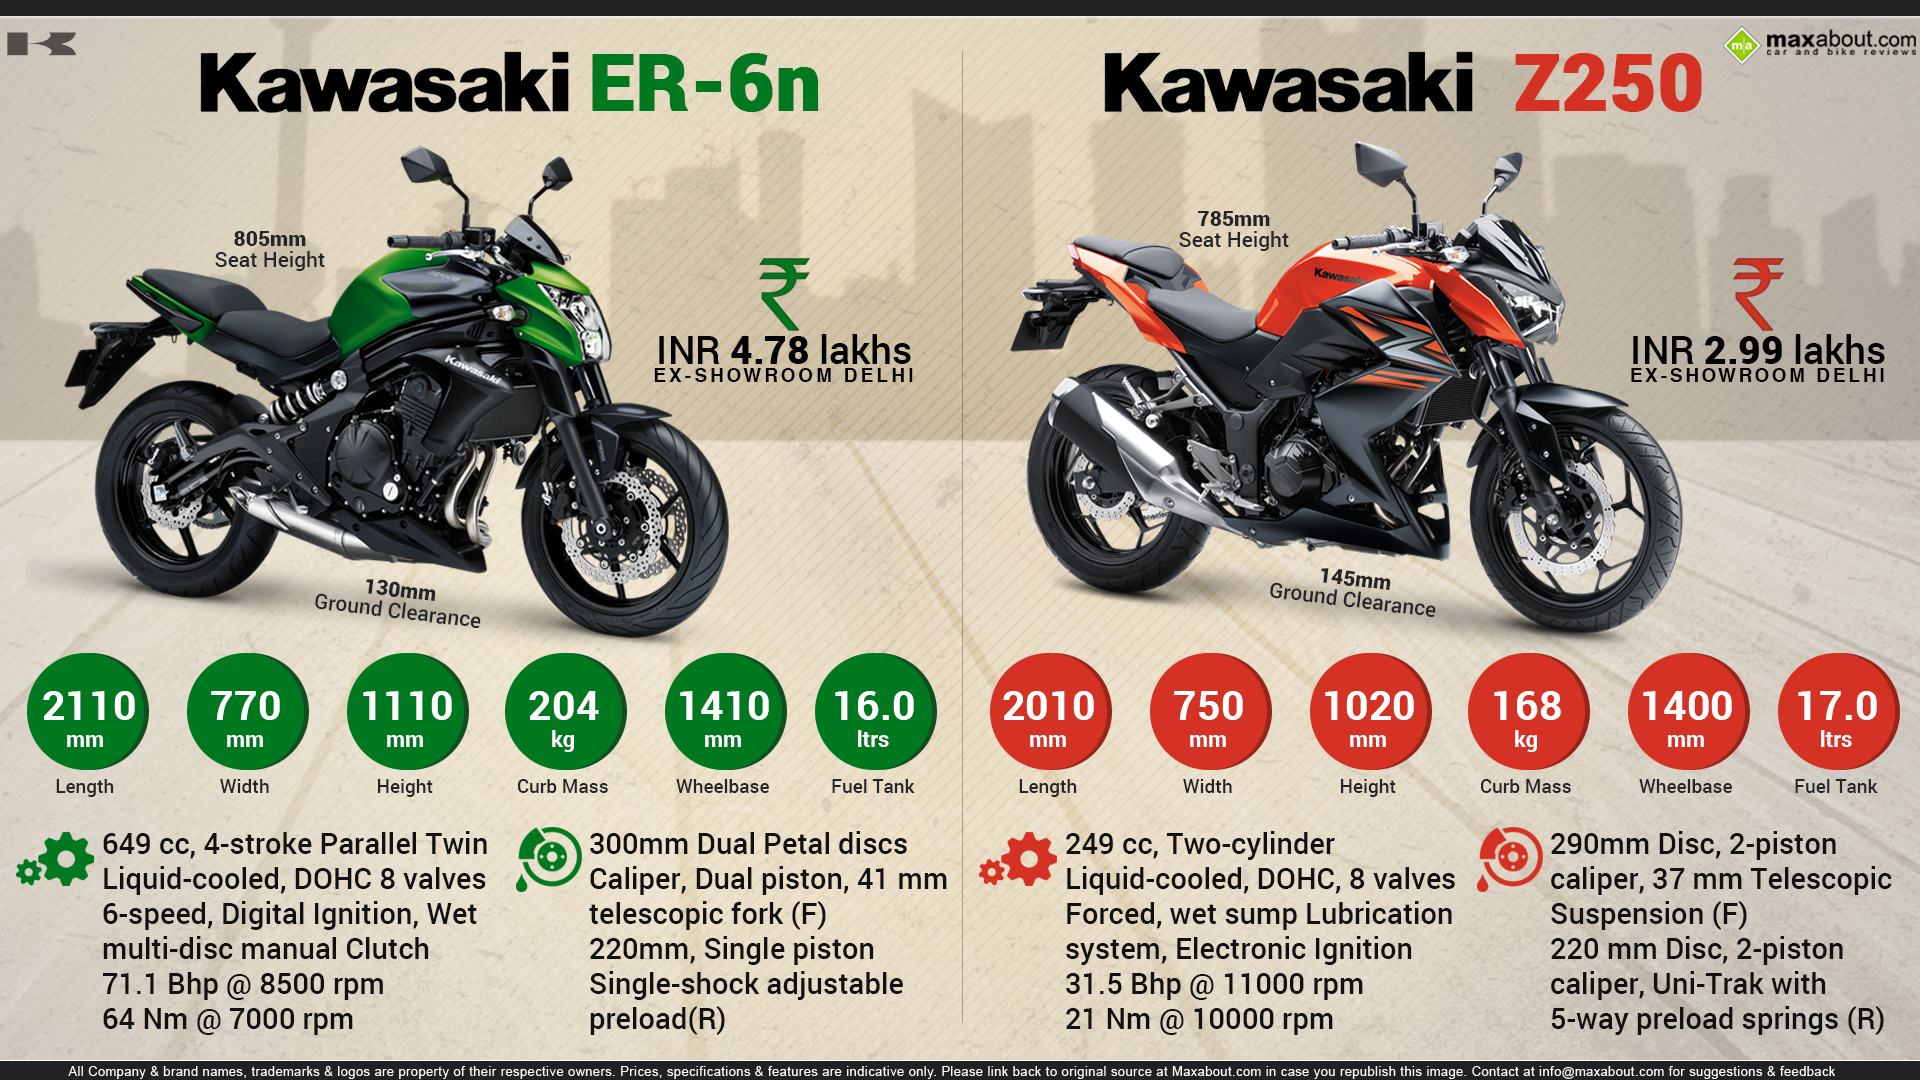 Kawasaki Ninja Z250 And ER-6n Price In India, Features 